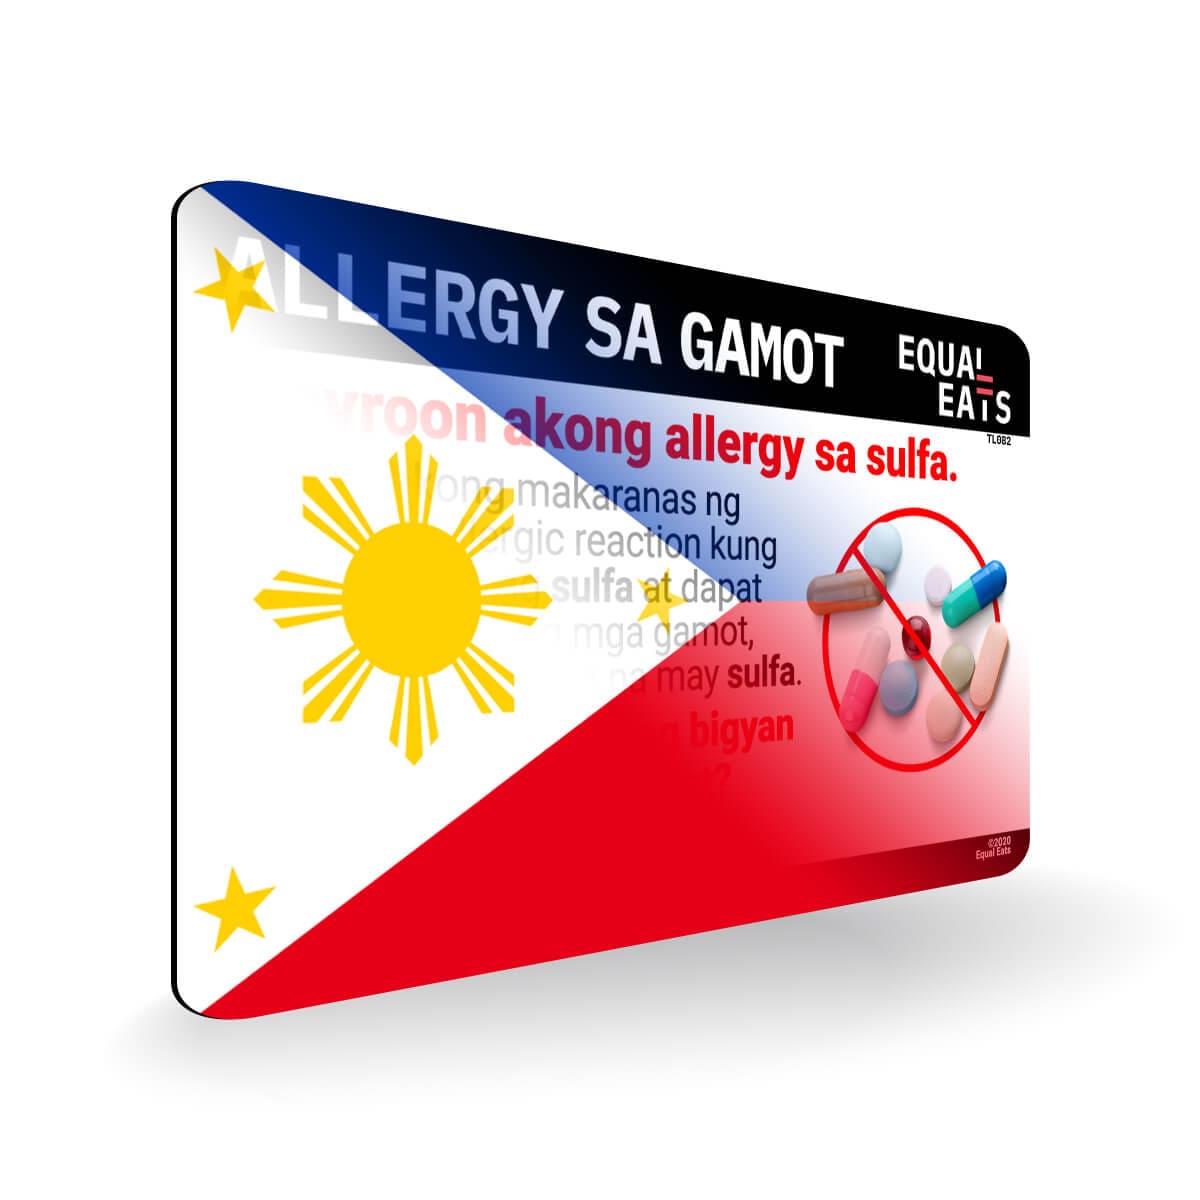 Sulfa Allergy in Tagalog. Sulfa Medicine Allergy Card for Philippines